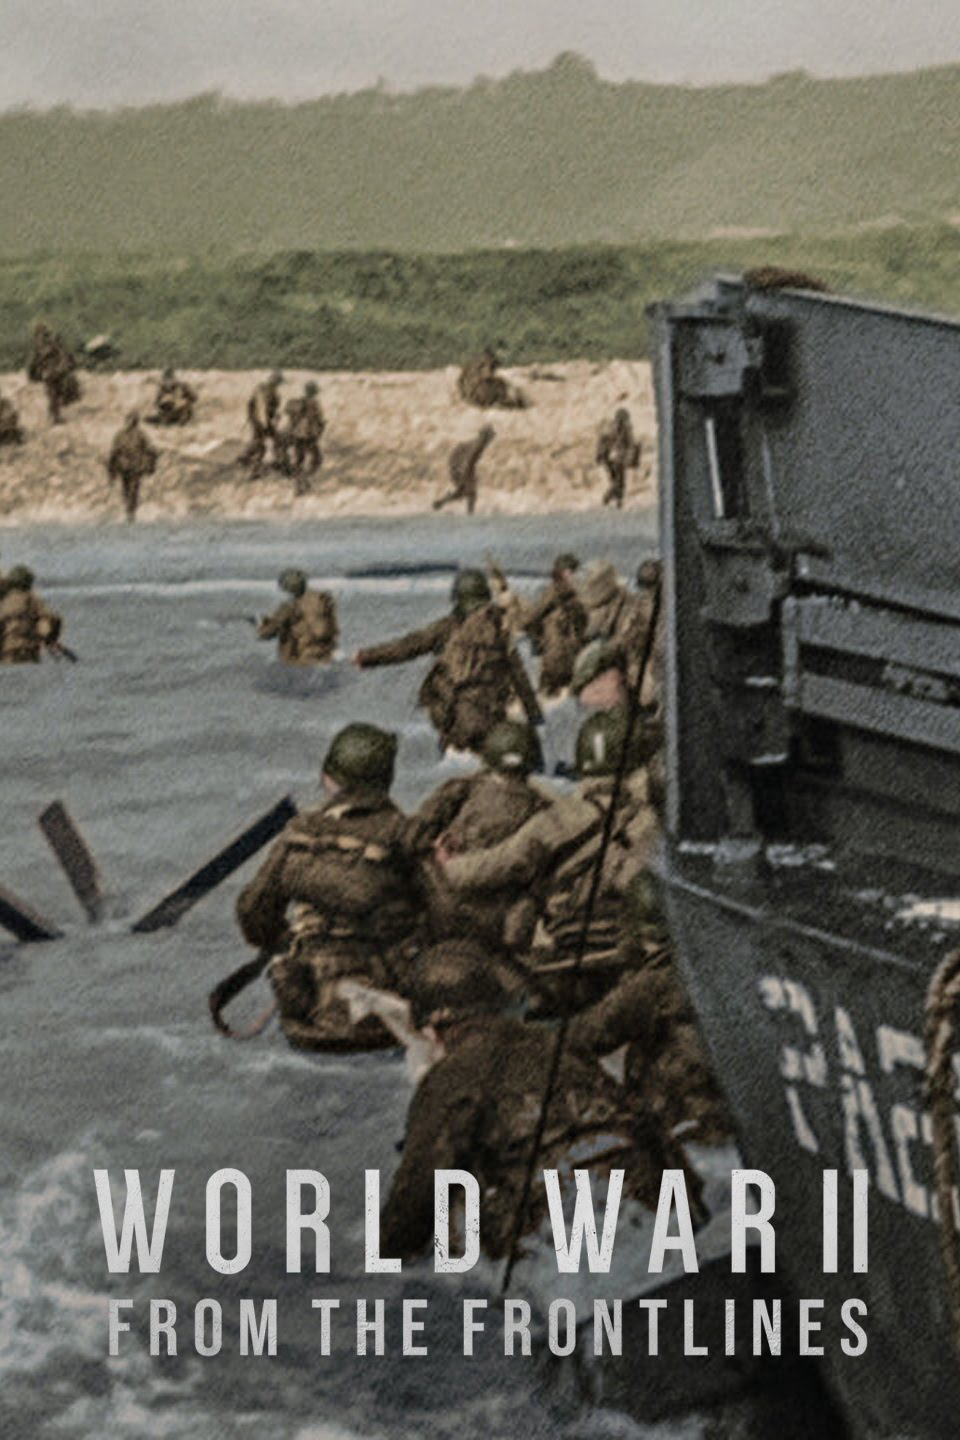 Xem Phim Thế chiến II: Lời kể từ tiền tuyến (World War II: From the Frontlines)